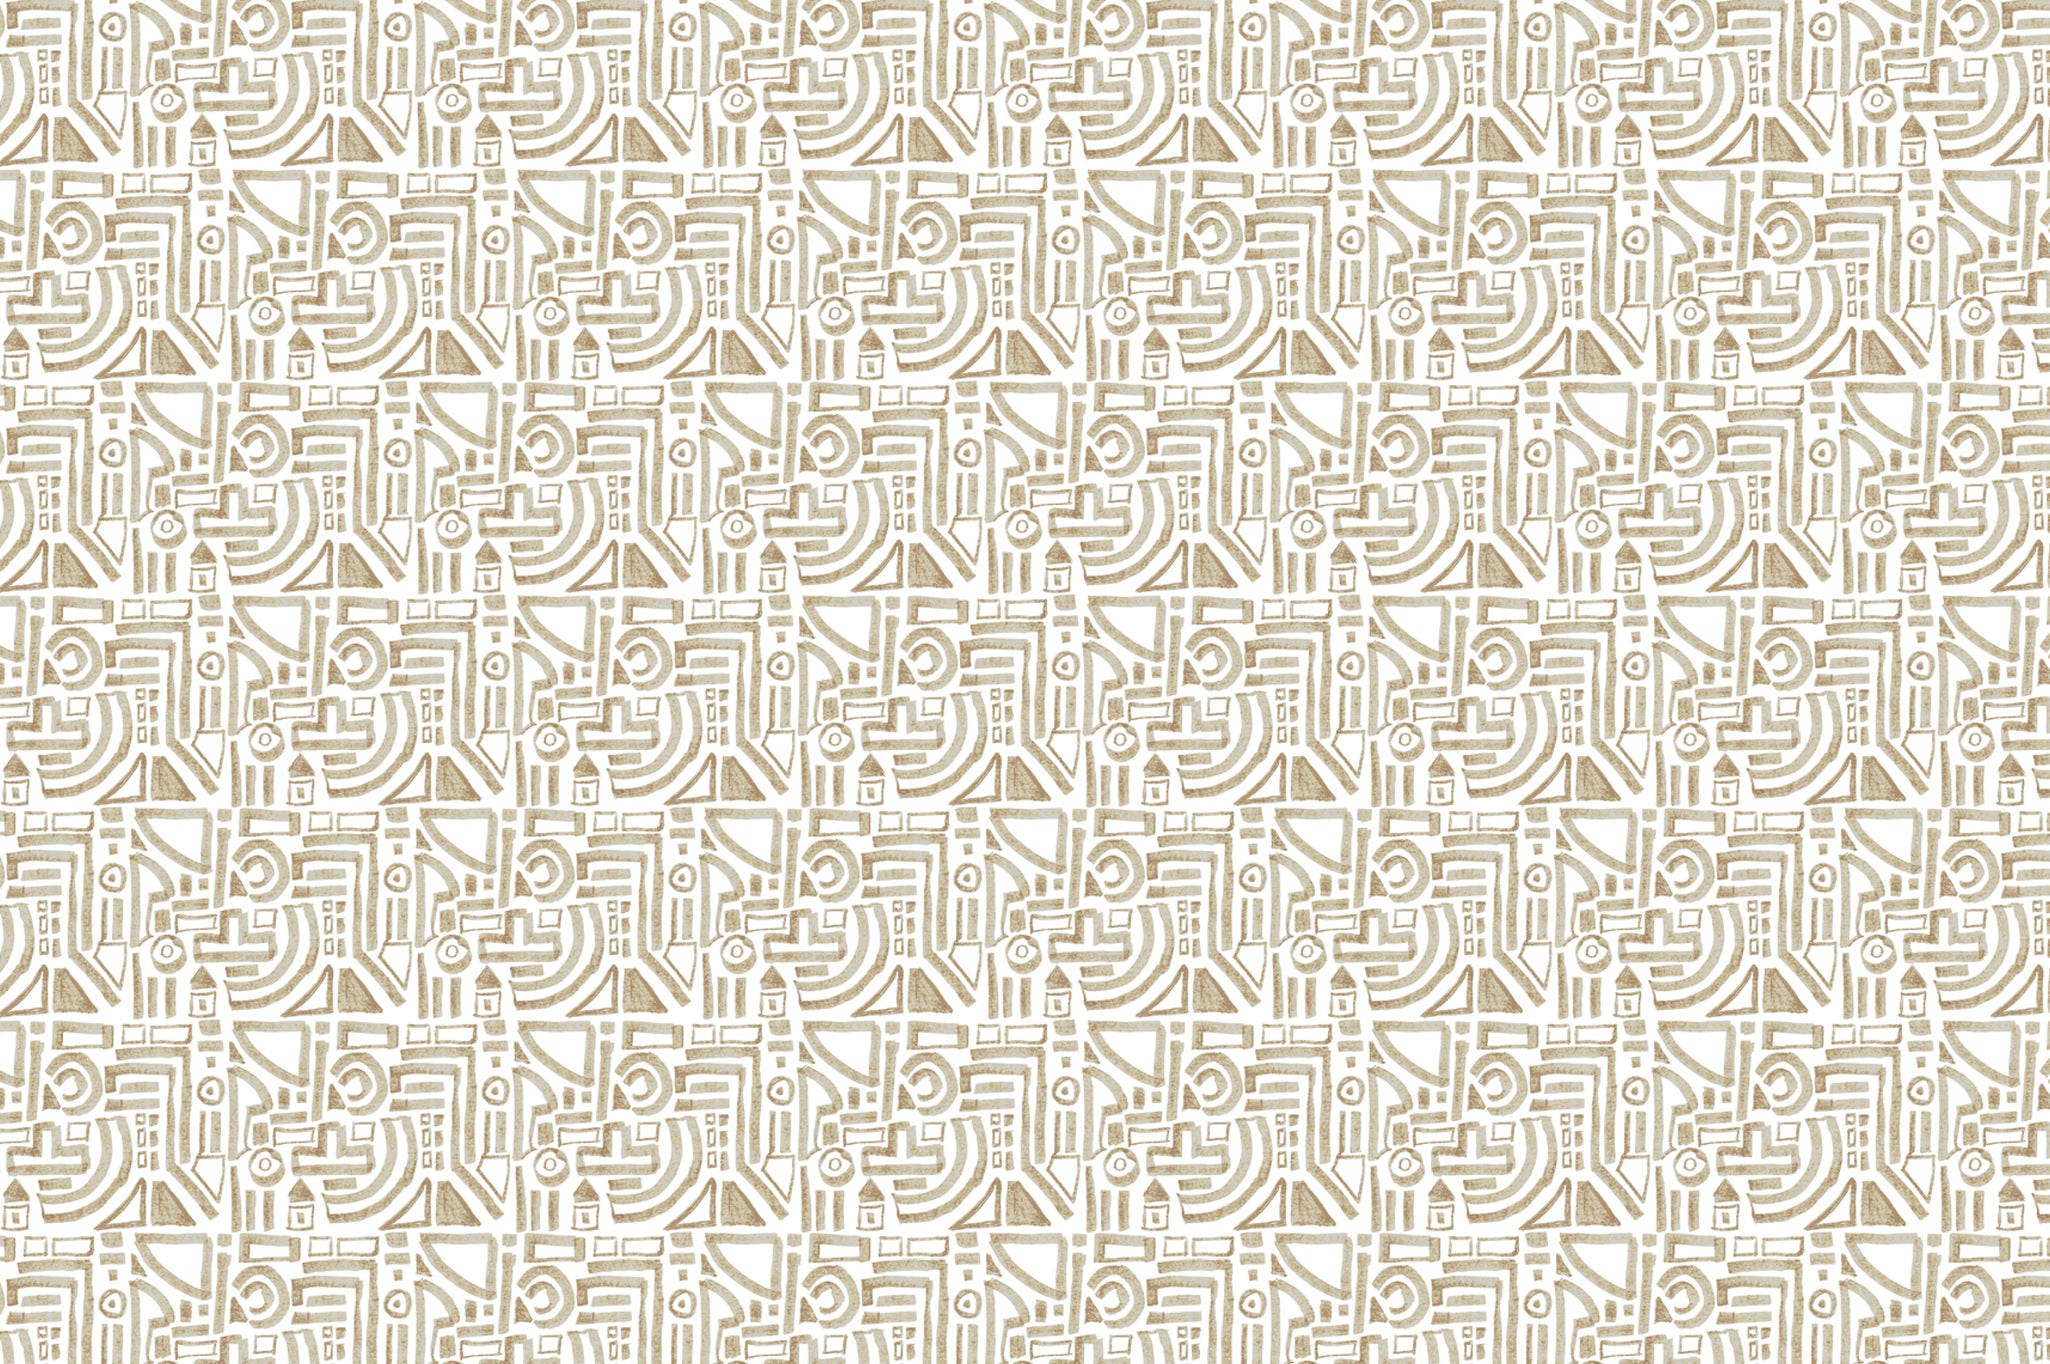 Detail of fabric in a dense geometric grid print in tan on a cream field.